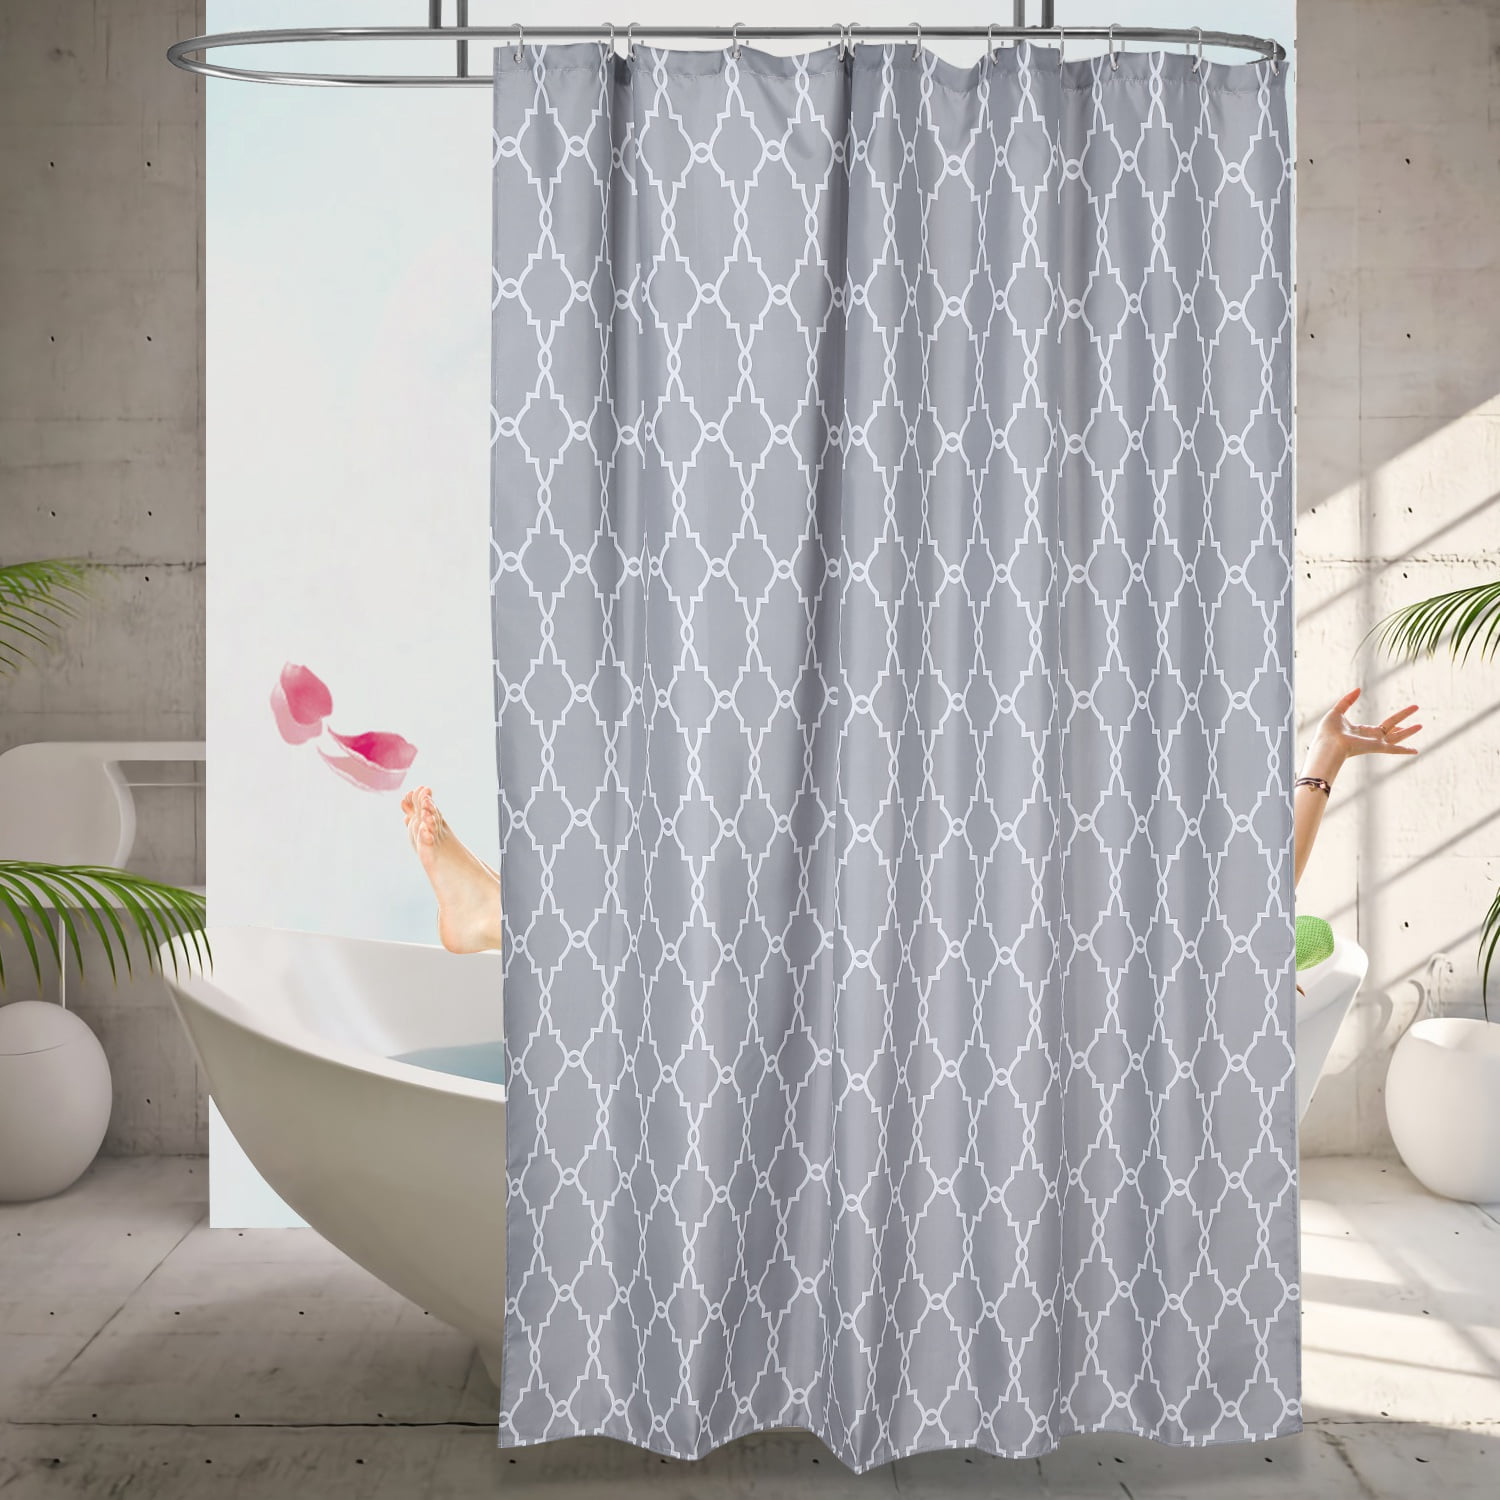 Bar Nice Blue Waterproof Bathroom Polyester Shower Curtain Liner Water Resistant 